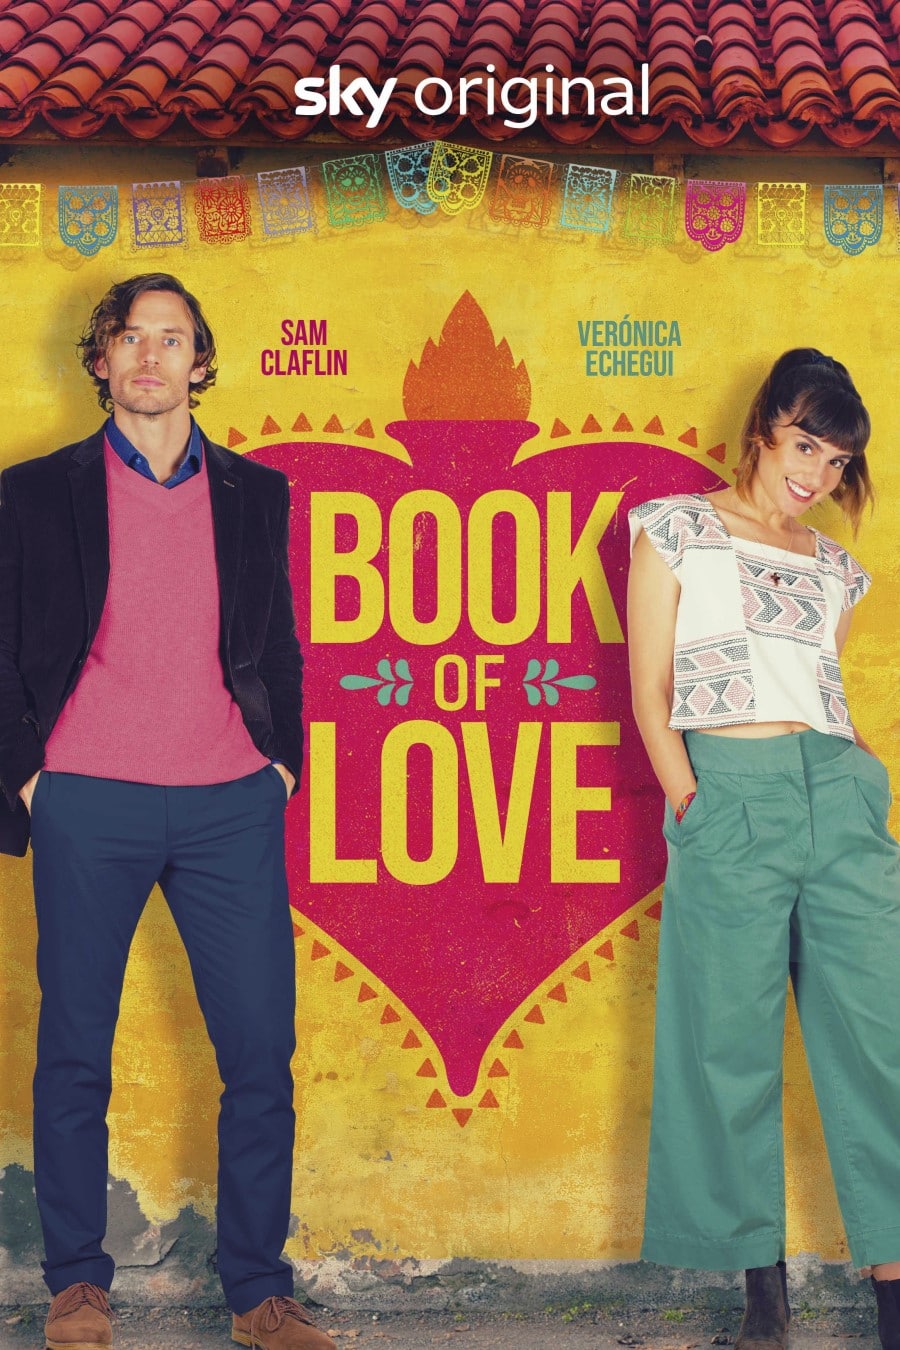 Sky Original Film "Book of Love" mit Sam Claflin